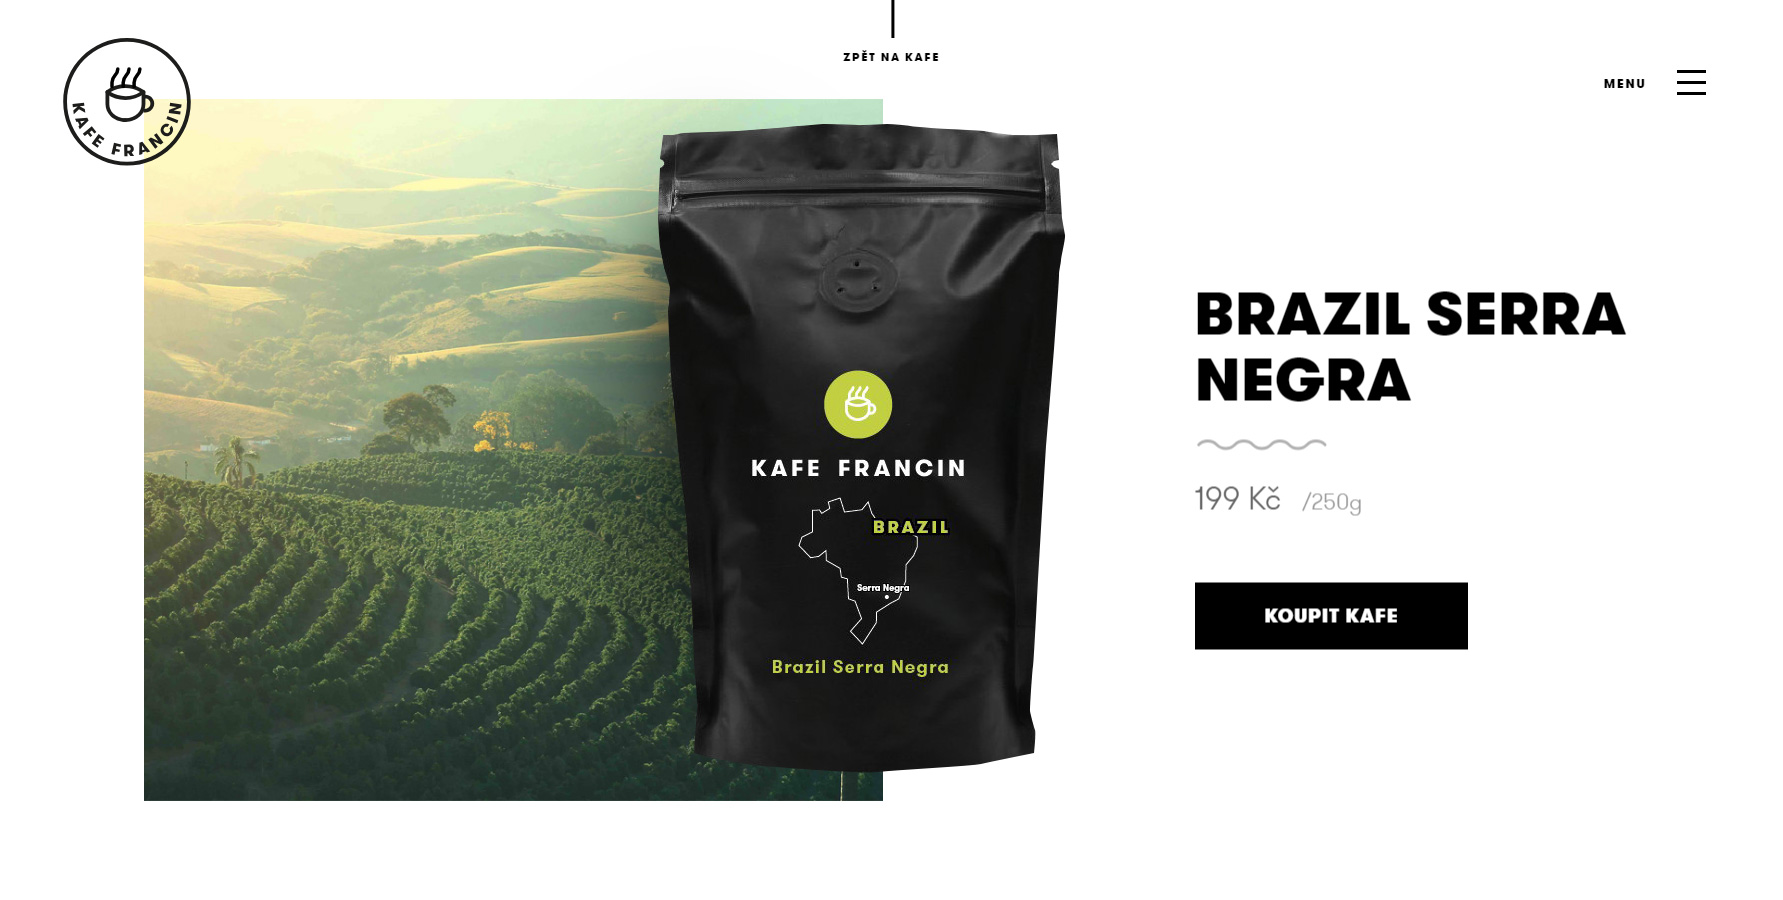 Kafe Francin - Website of the Day